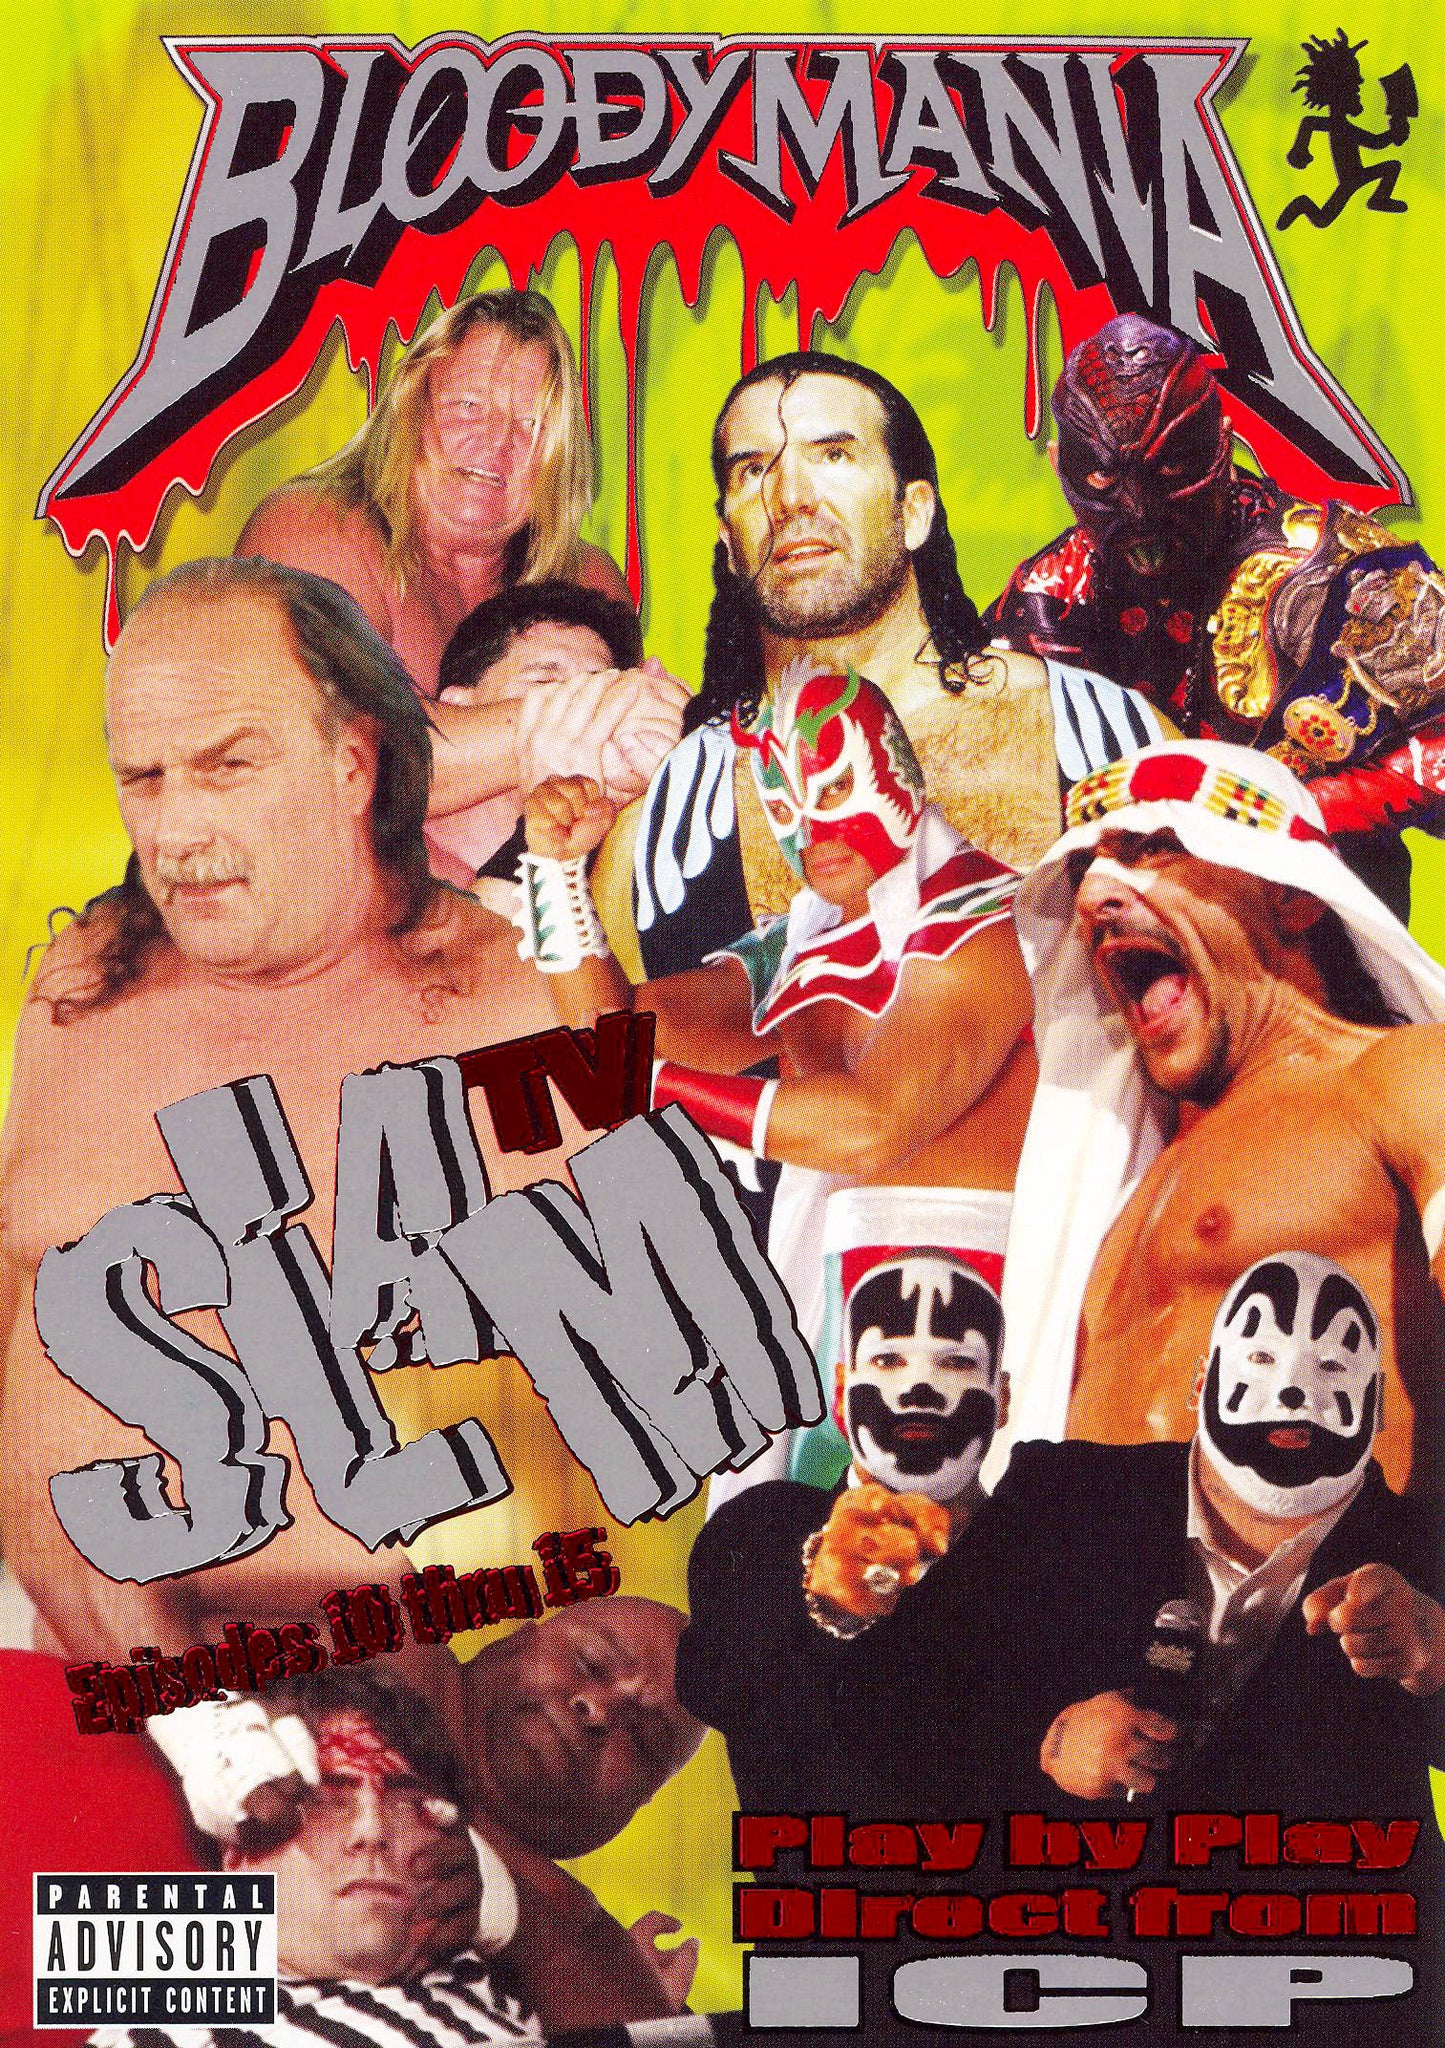 Slam TV 10-15 Featuring Bloodmania DVD